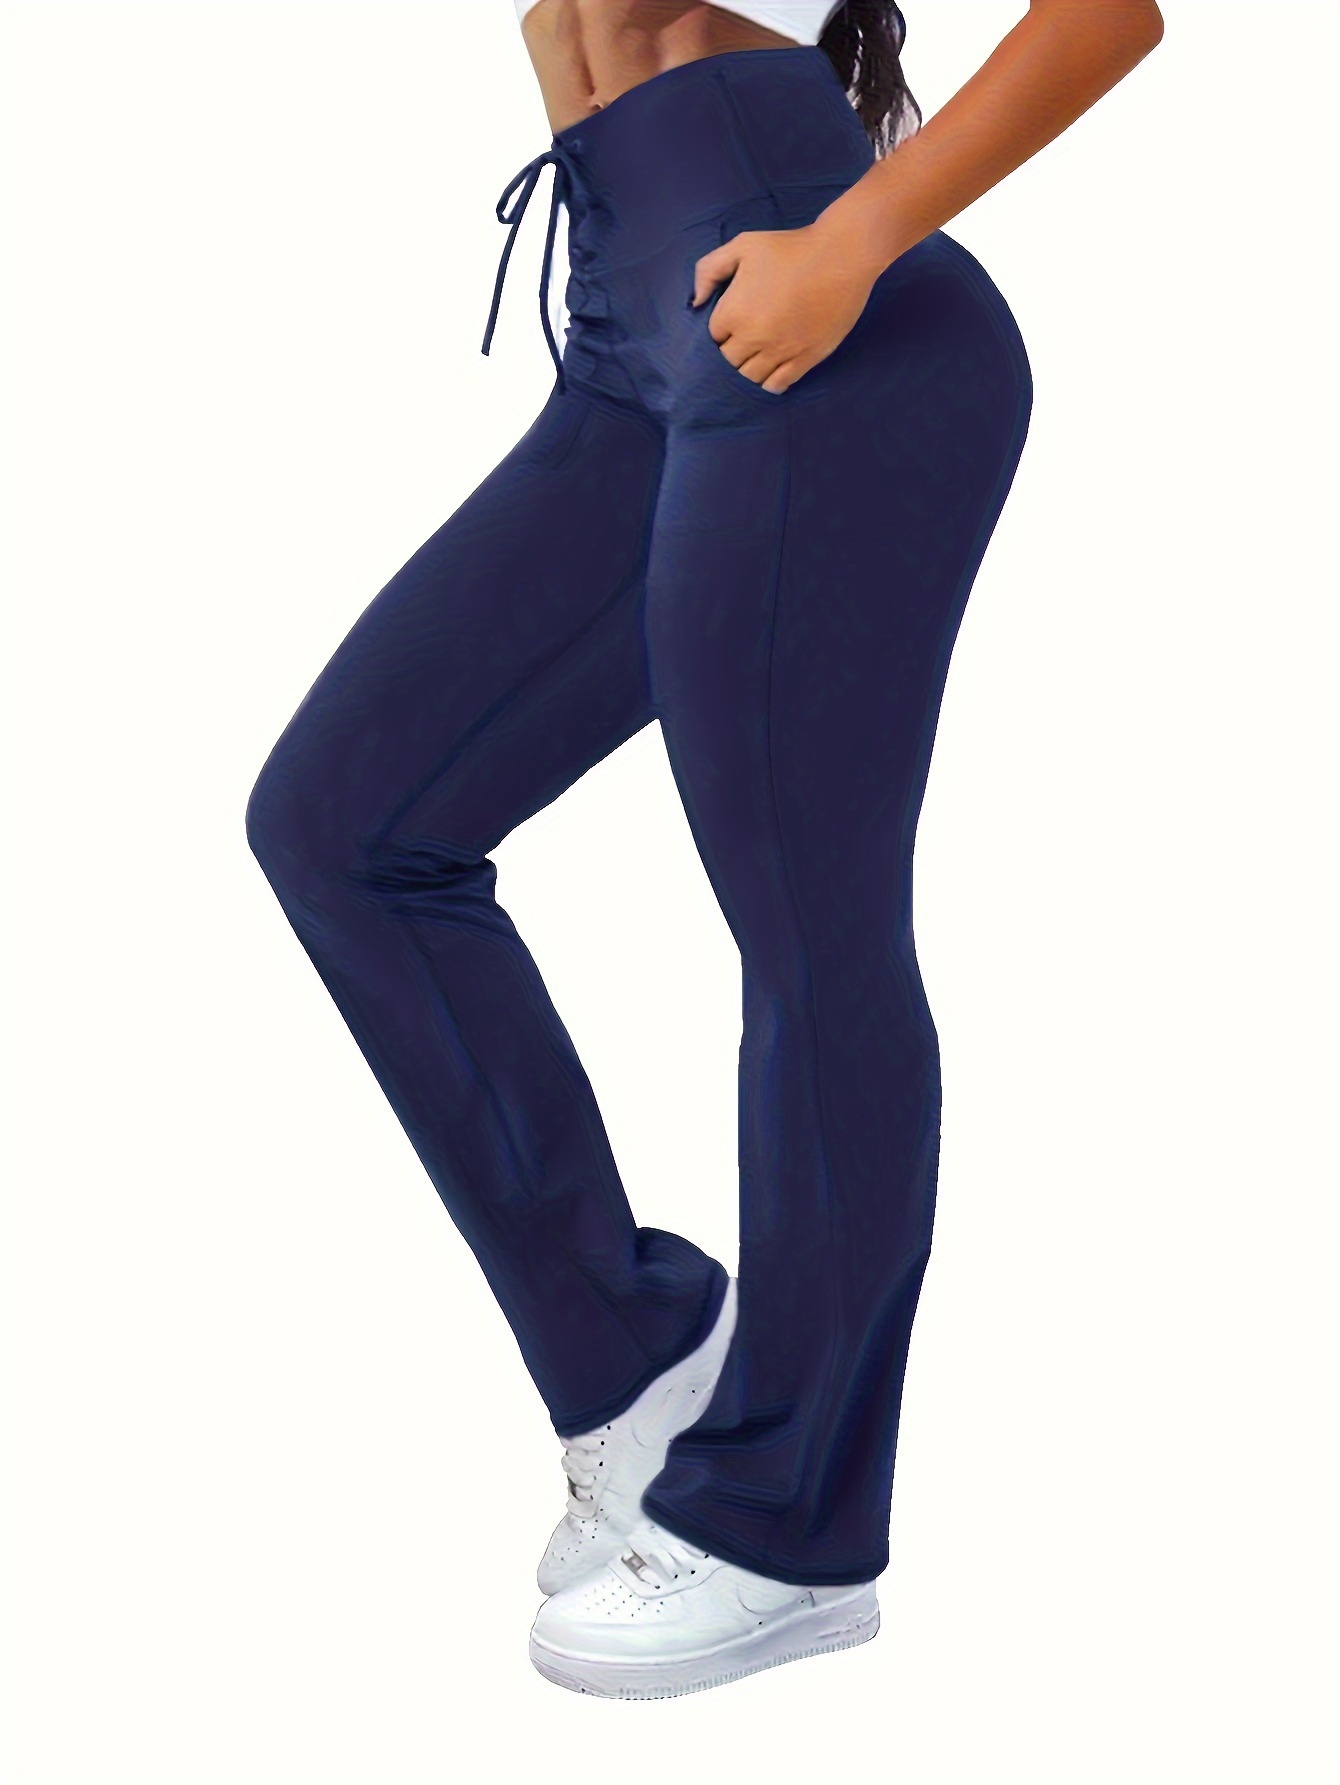 HSMQHJWE plus Size Yoga Pants for Women 3x Long Women's